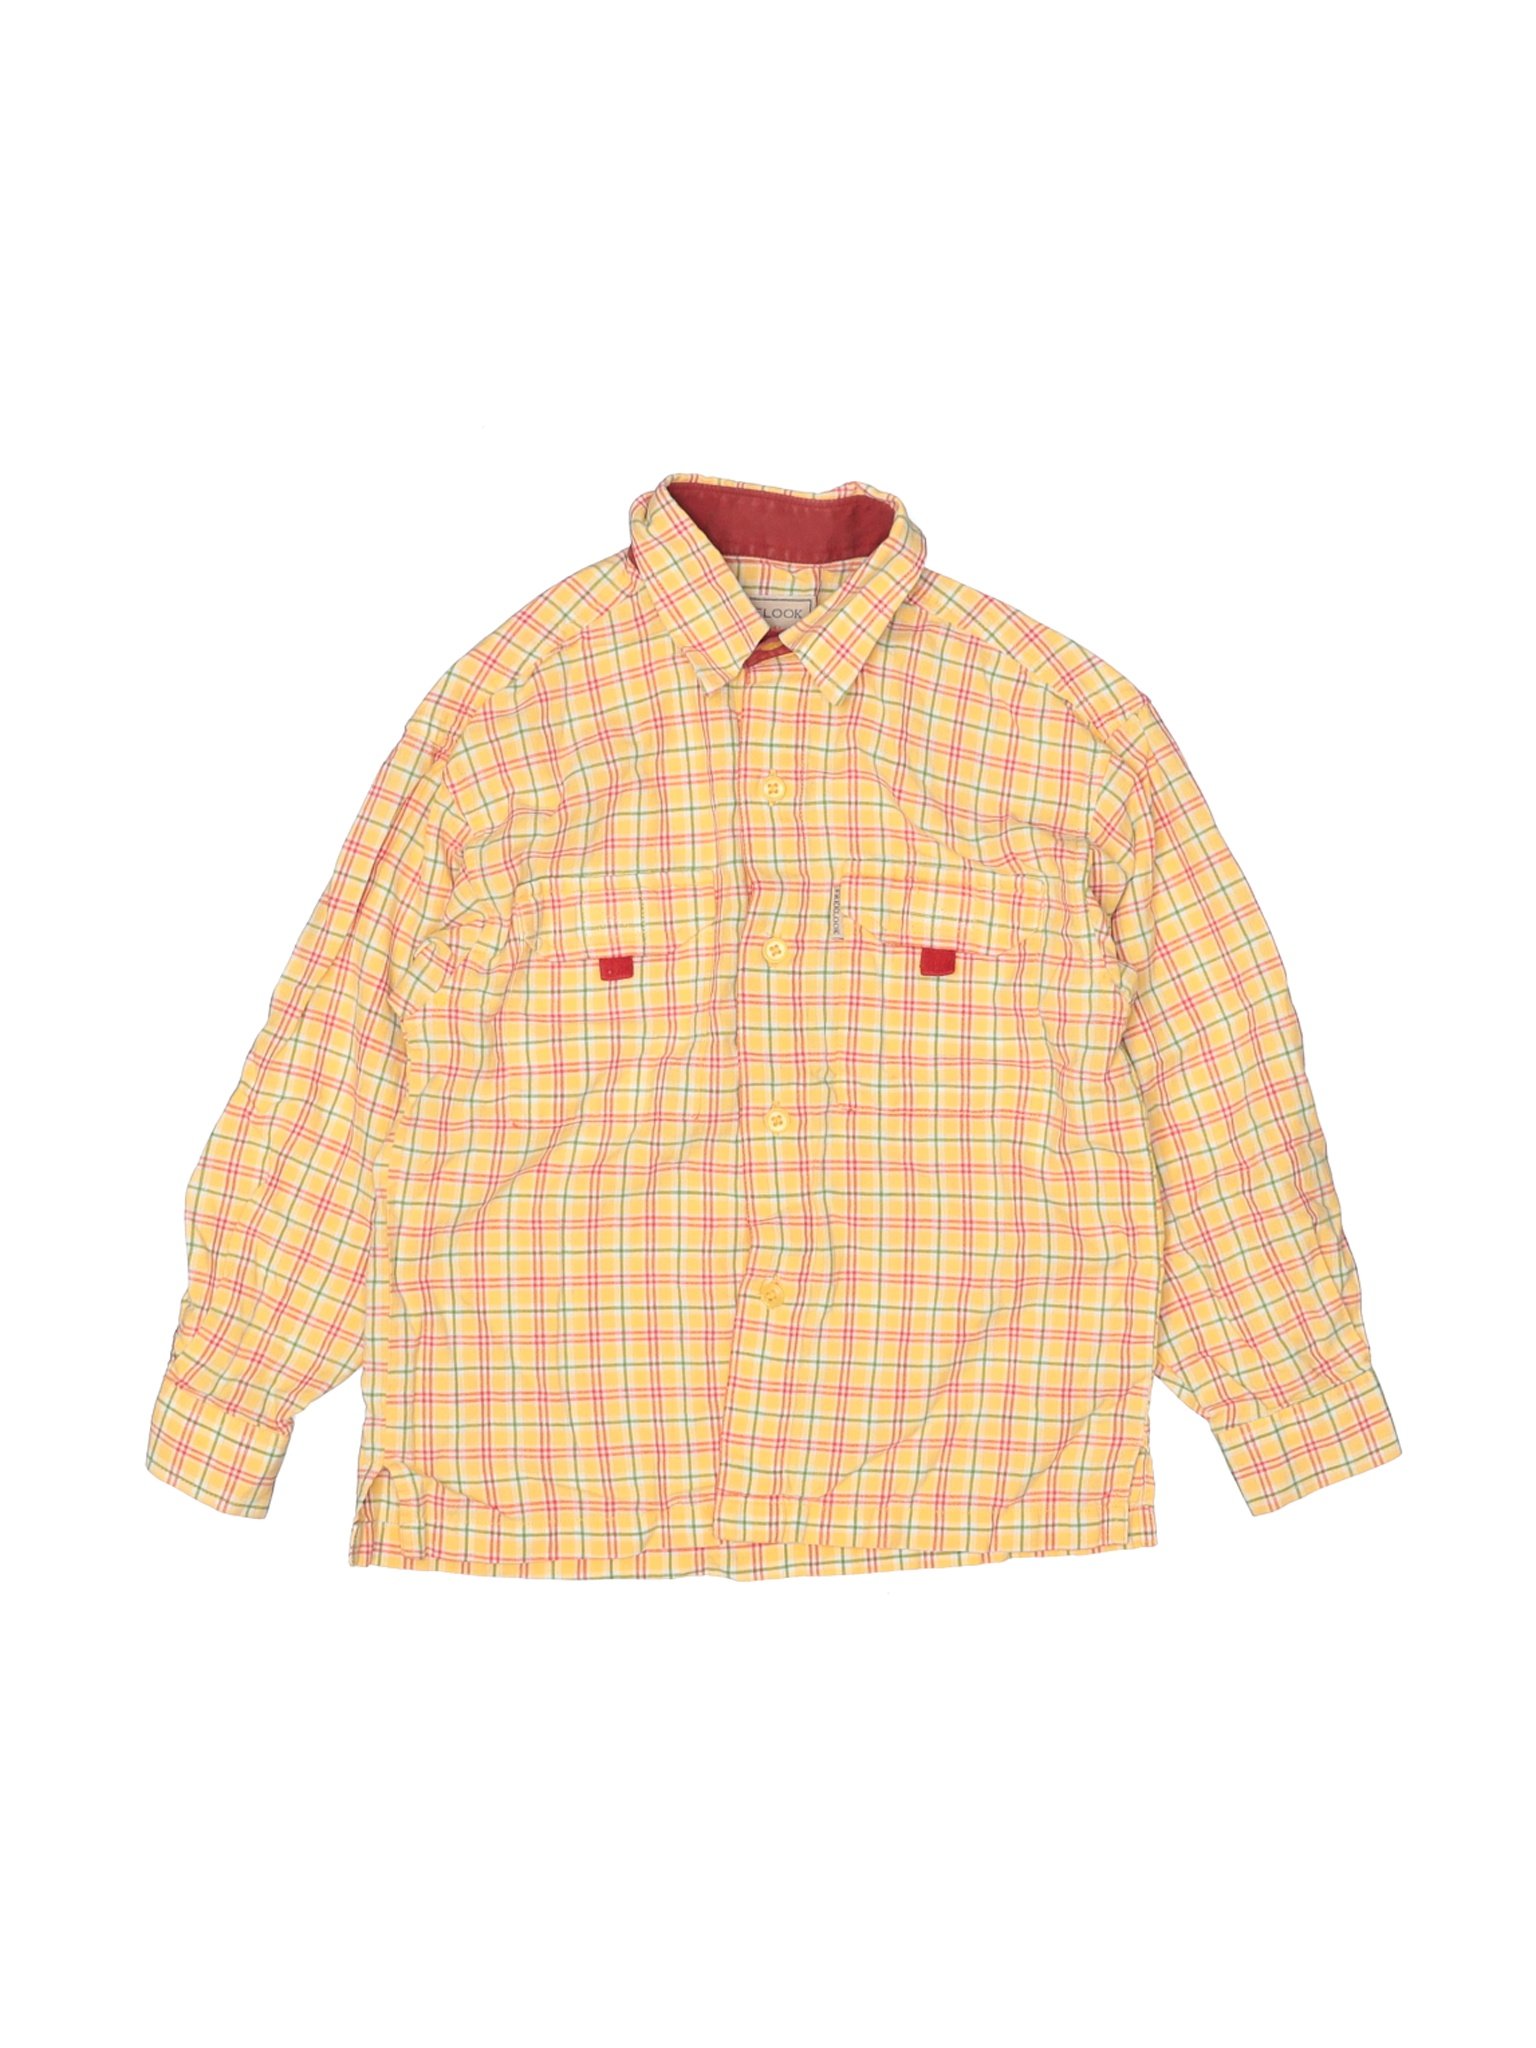 Assorted Brands Boys Yellow Long Sleeve Button-Down Shirt 6 | eBay